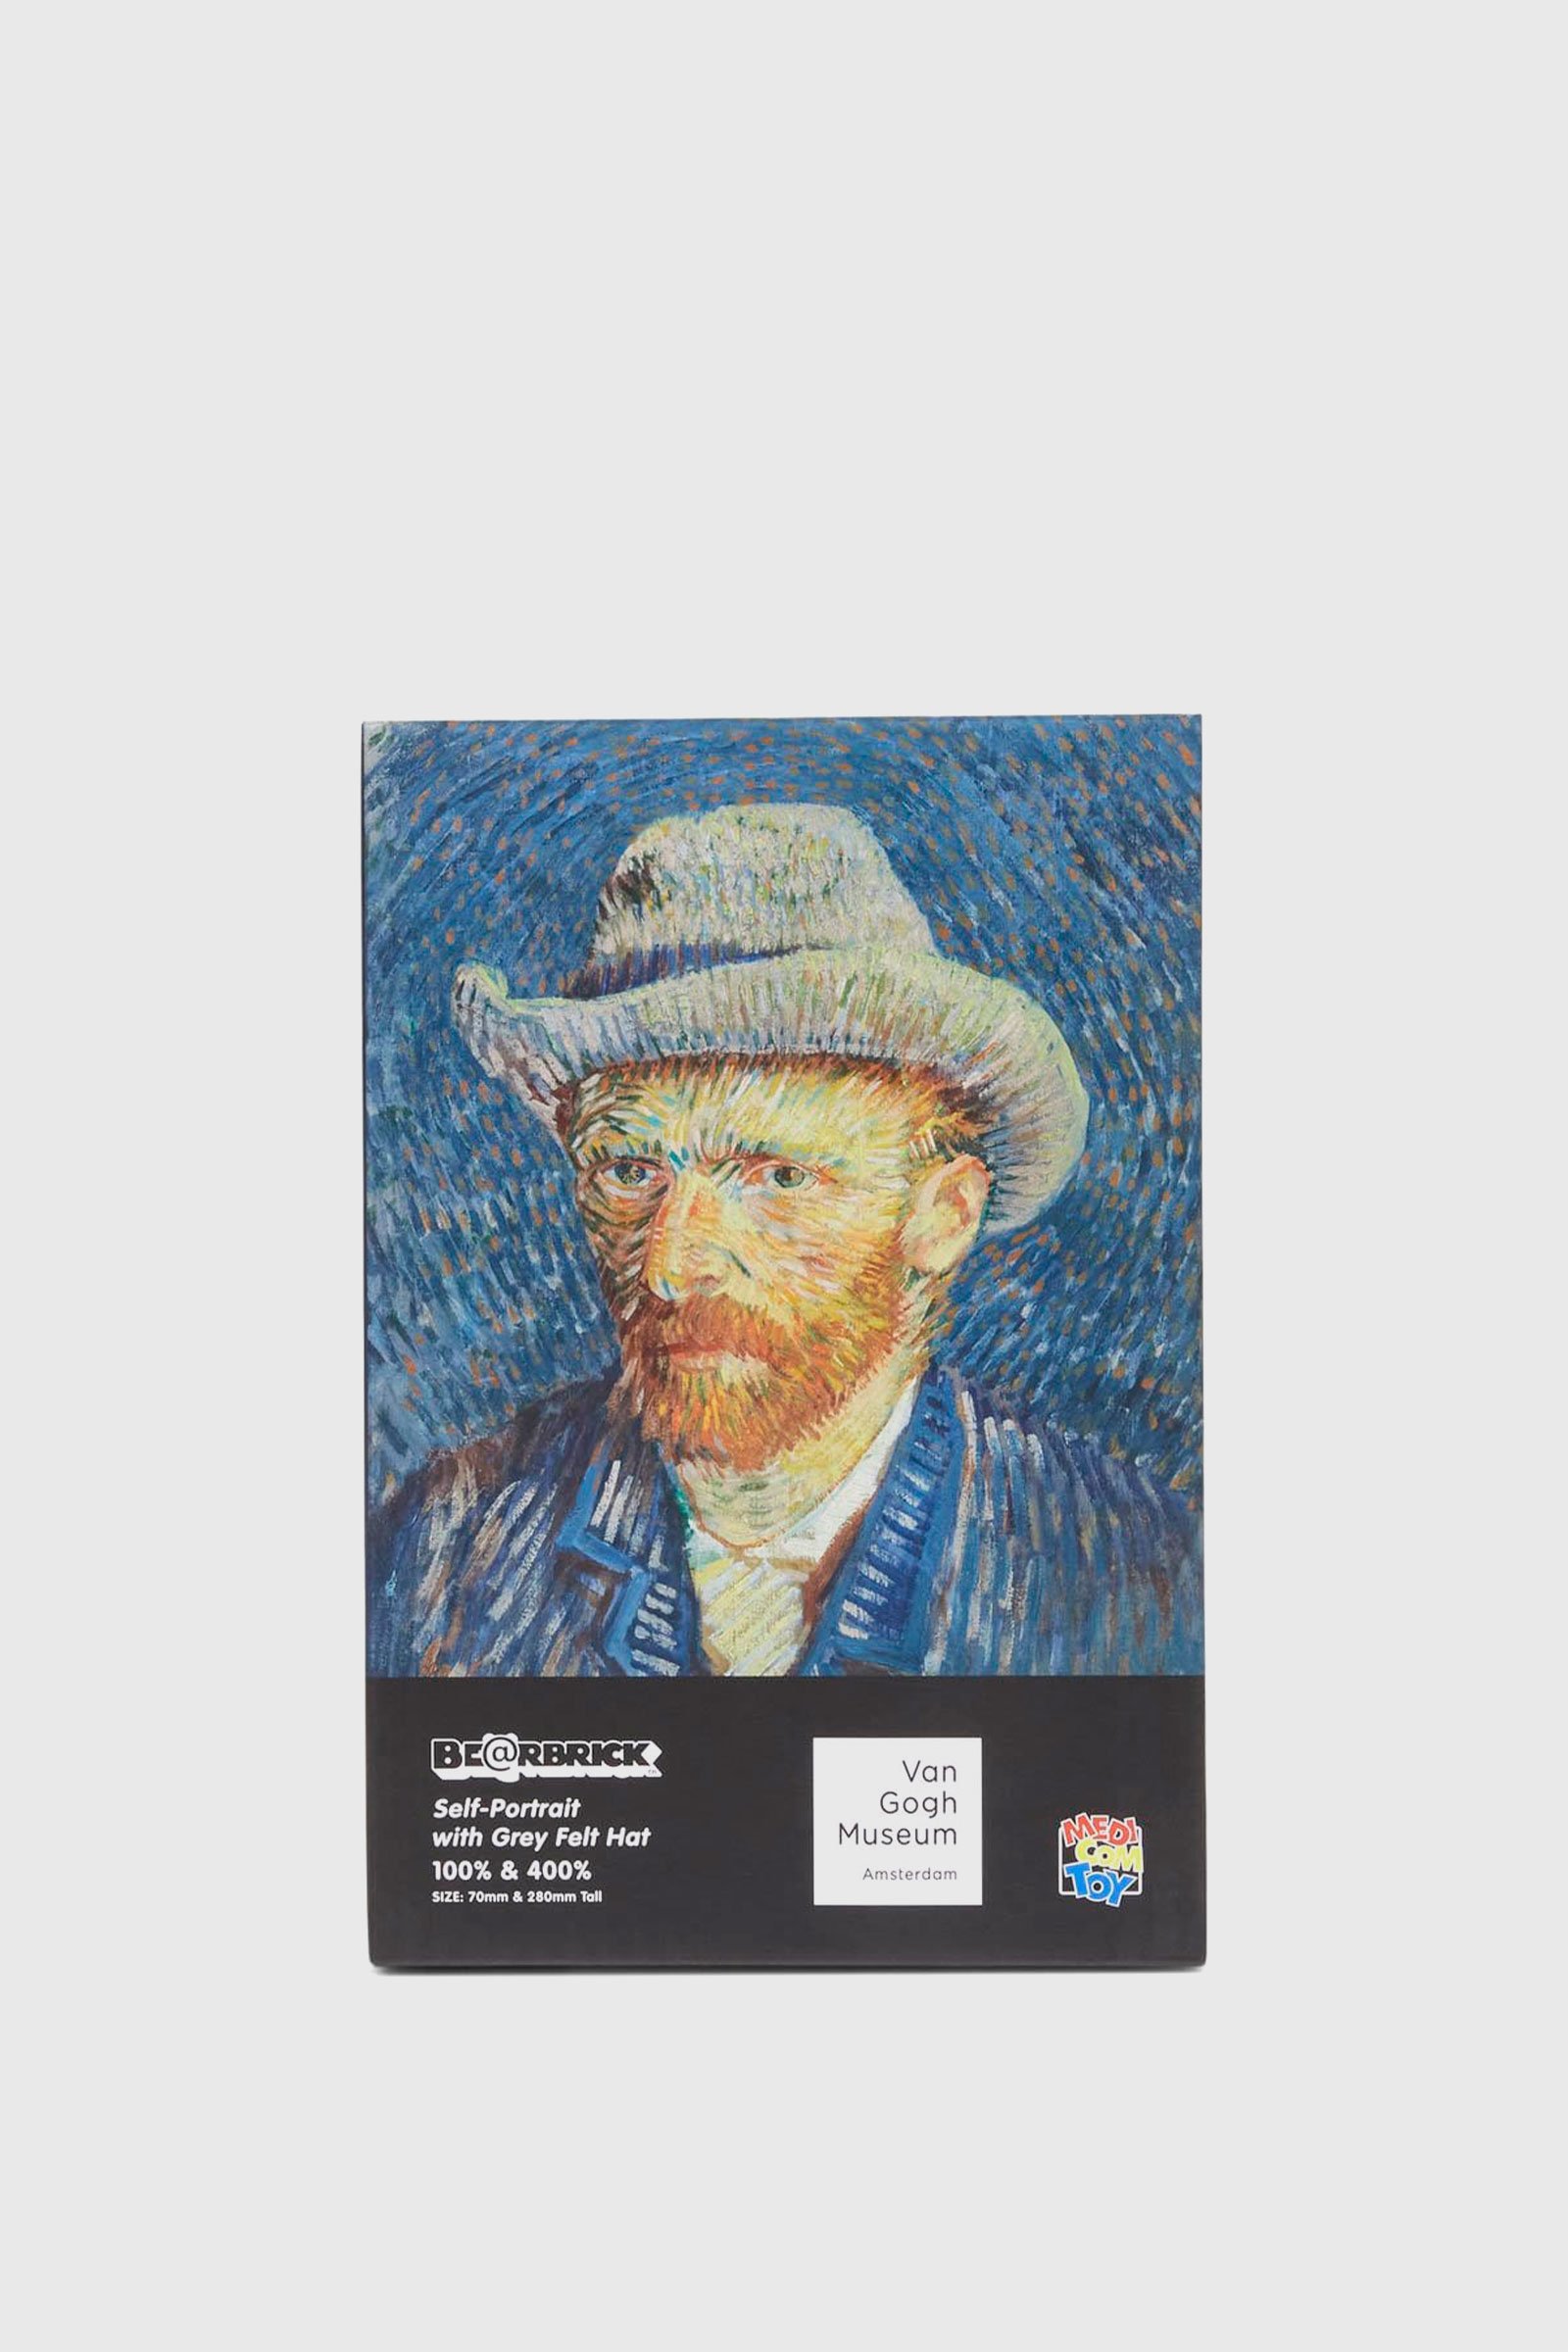 Van Gogh Museum 100% & 400%